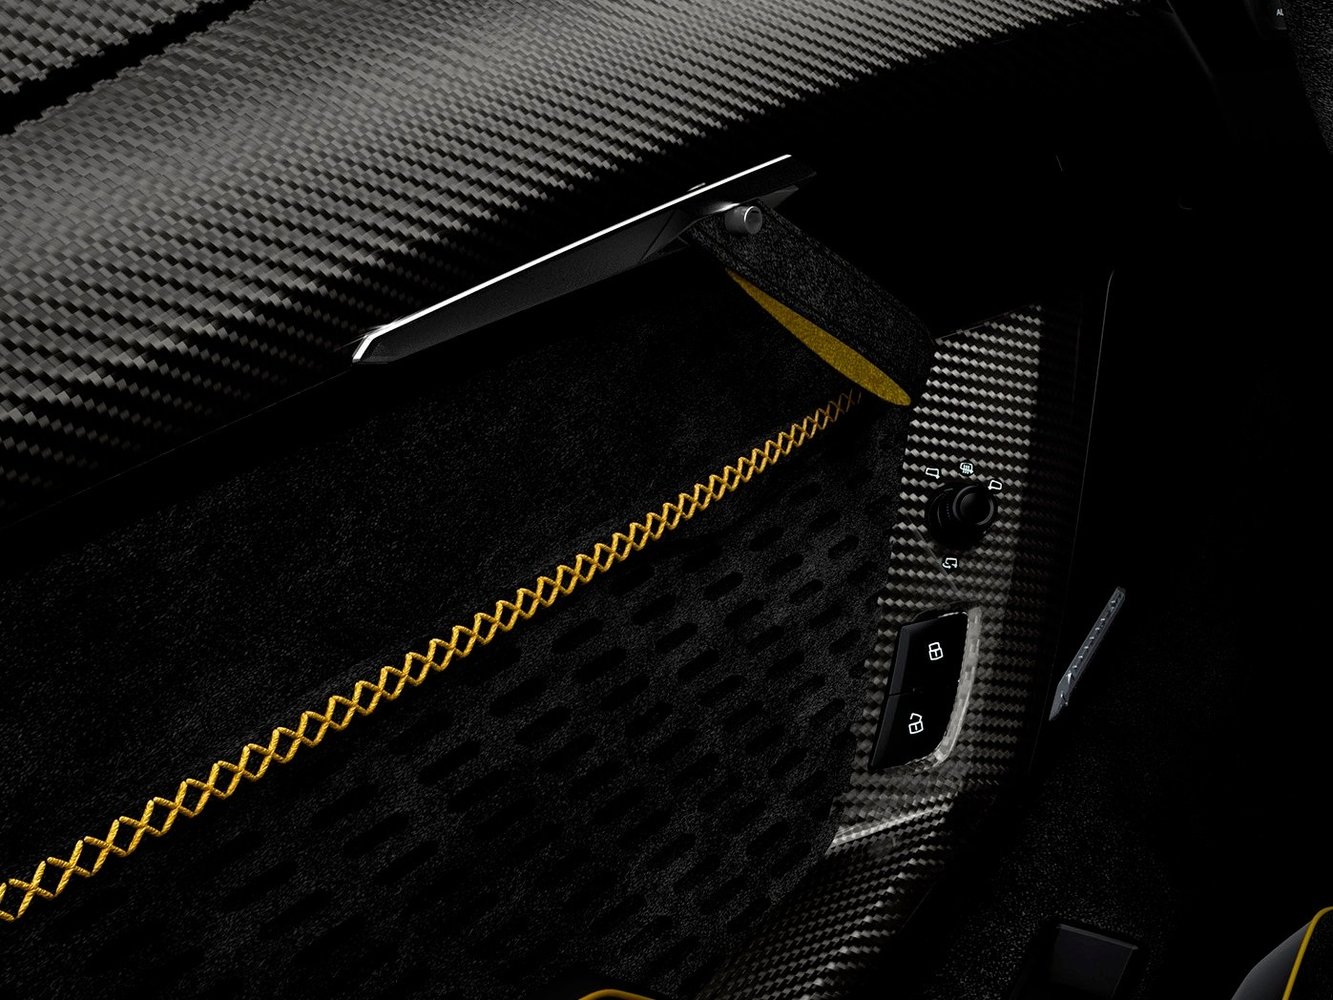 купе Lamborghini Centanario 2016г выпуска модификация 6.5 AMT (770 л.с.) 4×4